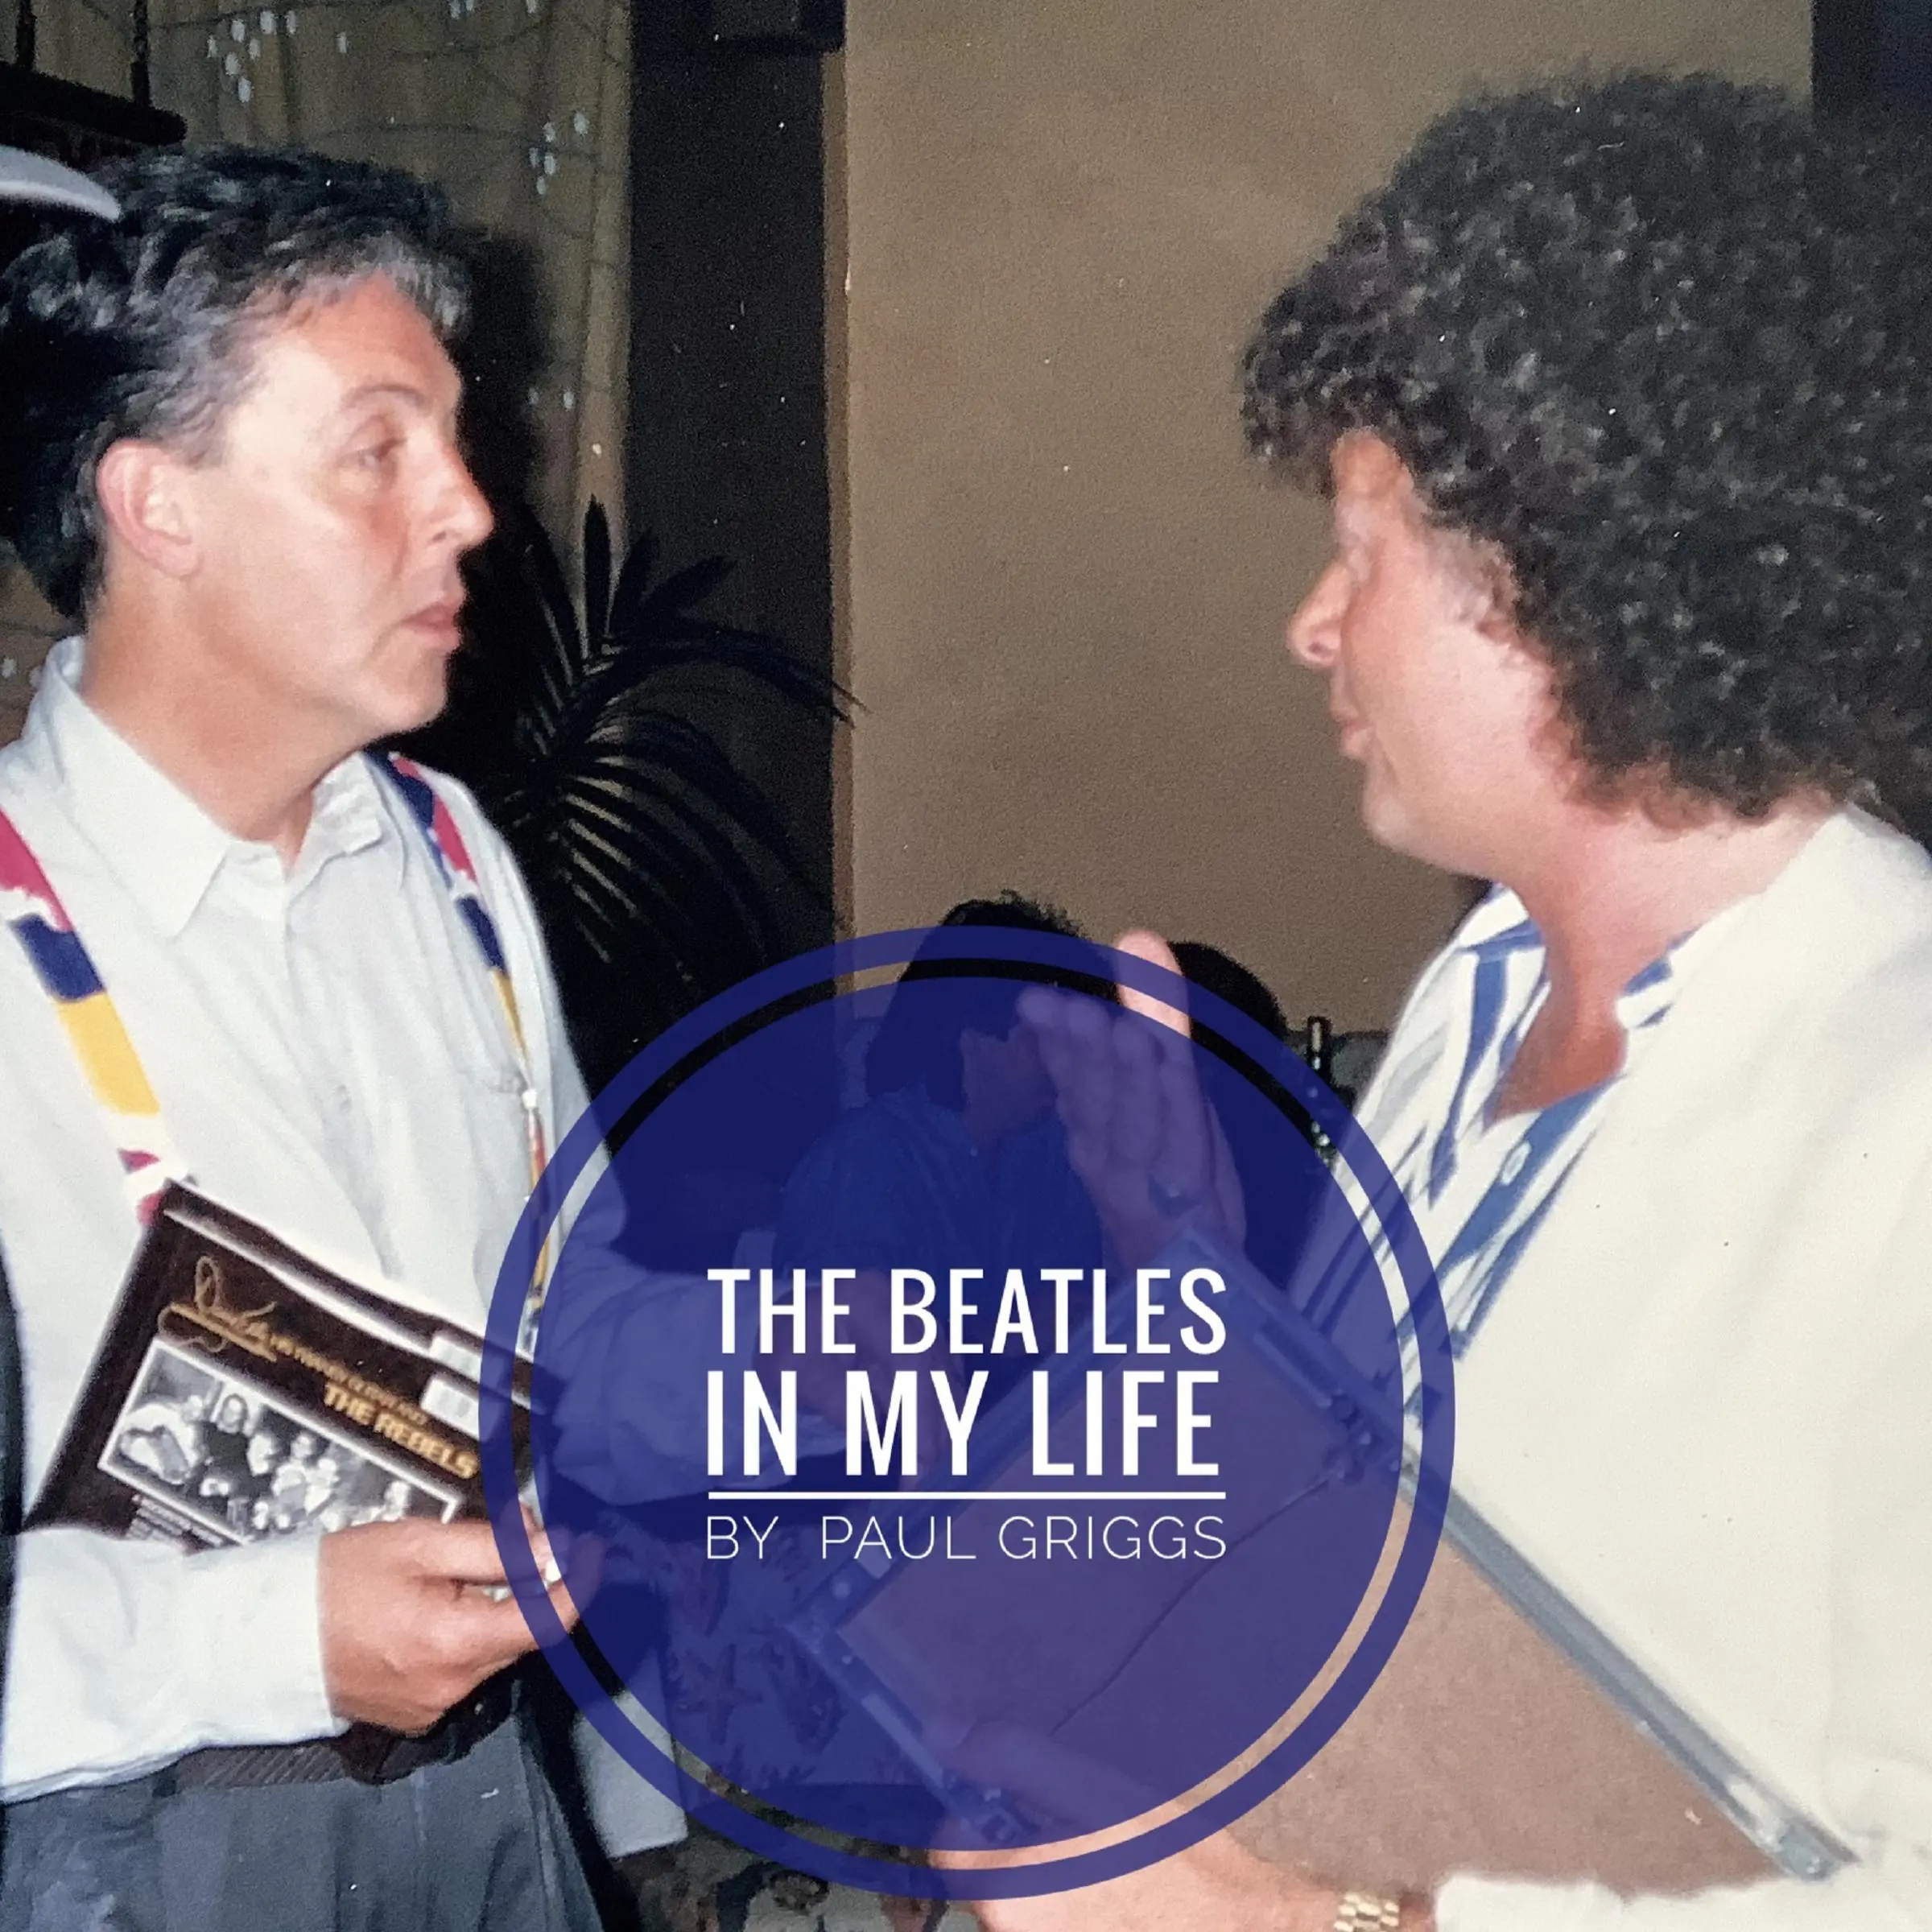 The Beatles in my life by Paul Griggs Audiobook